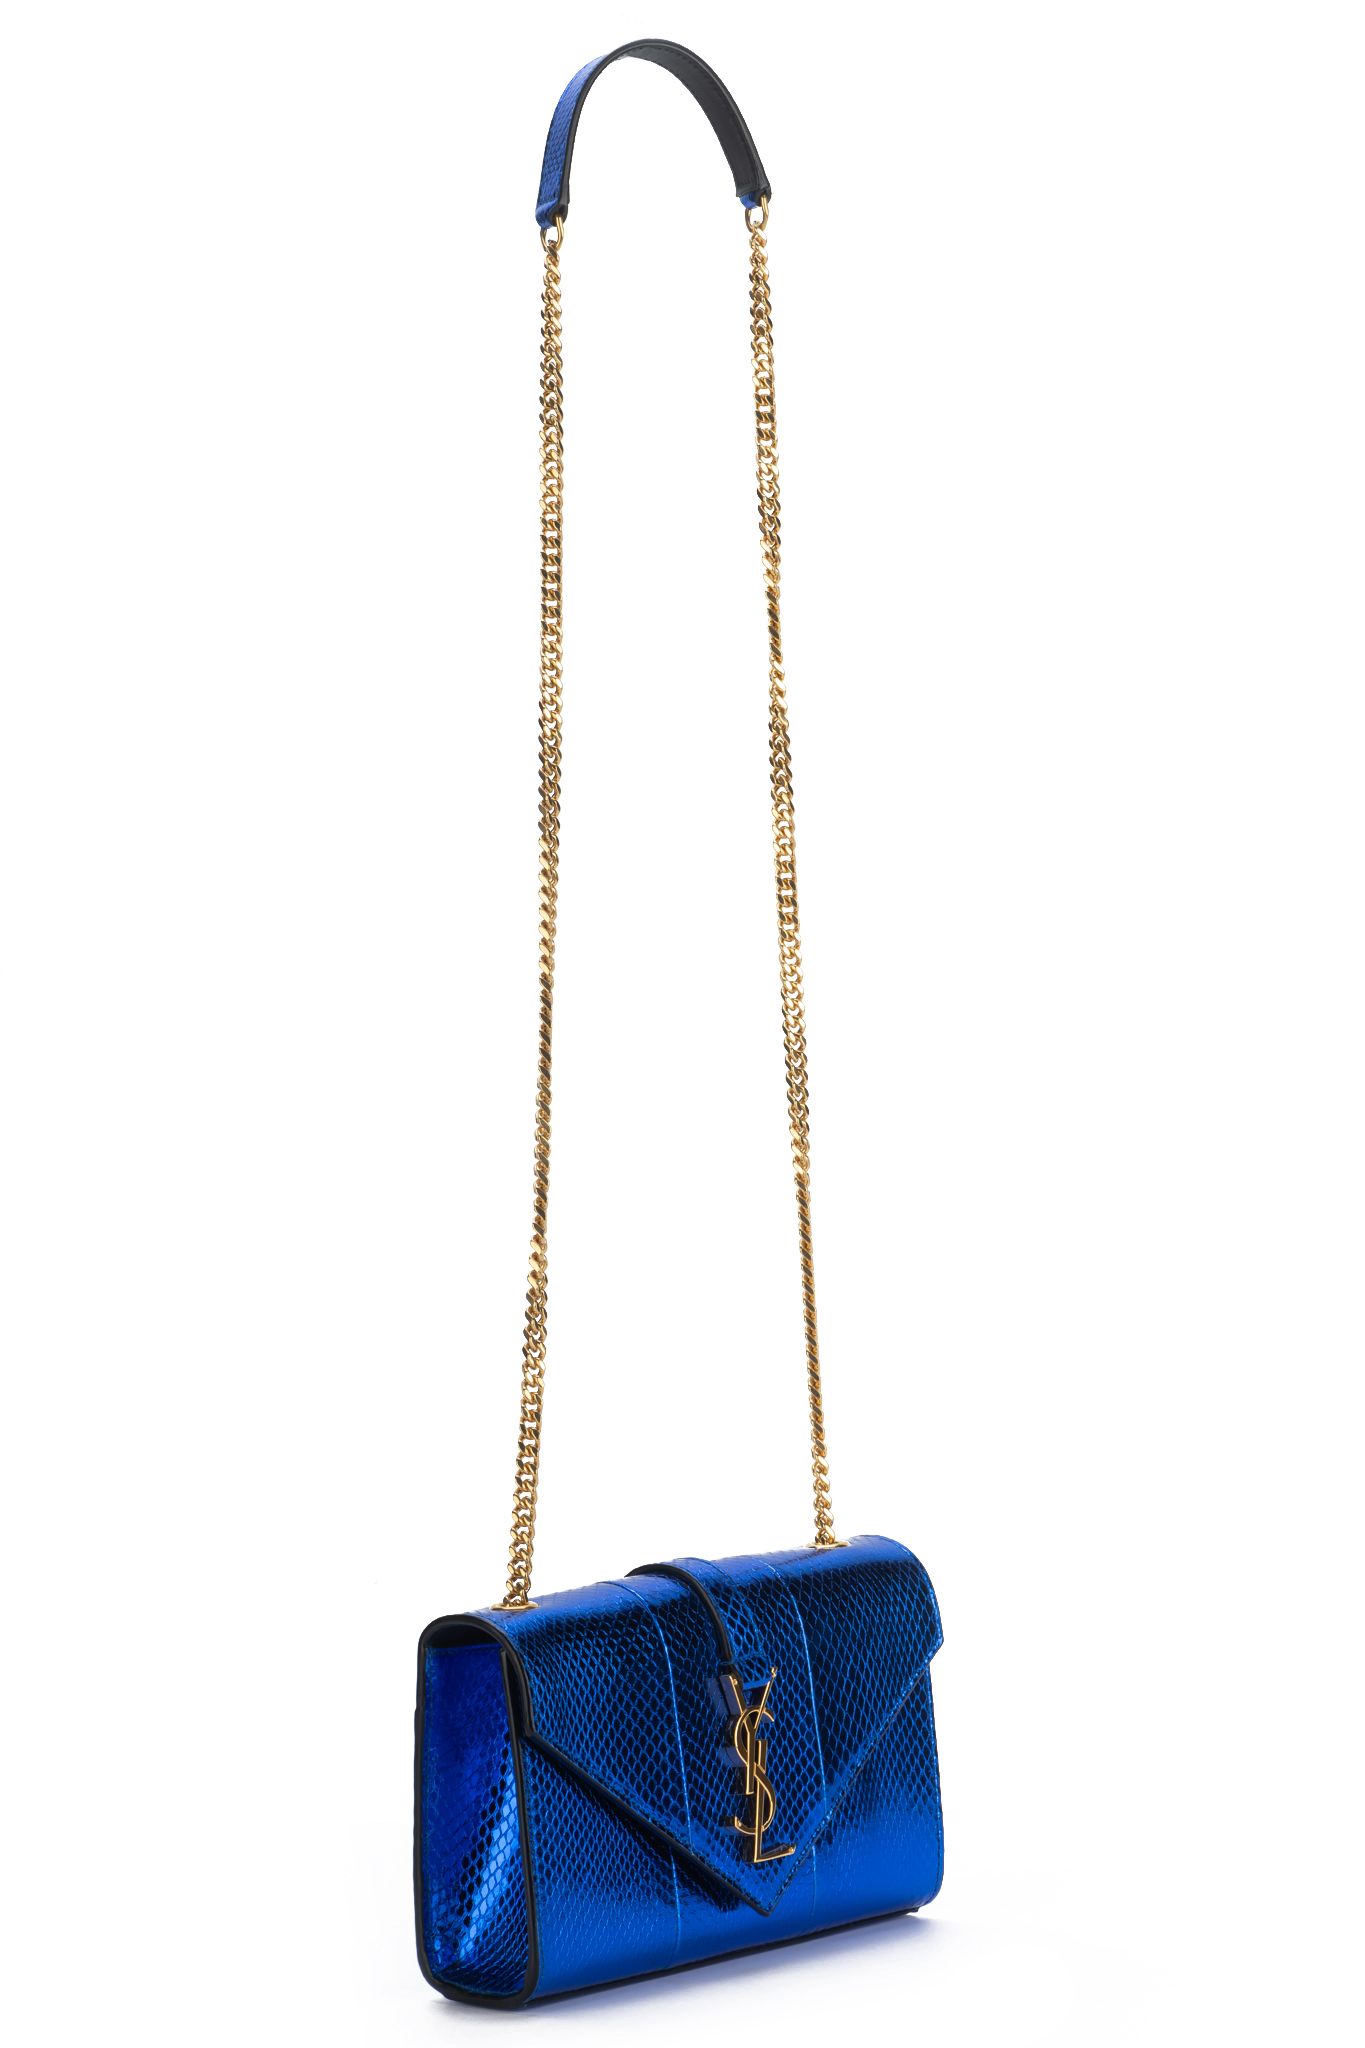 New Kate Monogram Ysl Small Metallic Snake Crossbody Bag In Shiny Blue